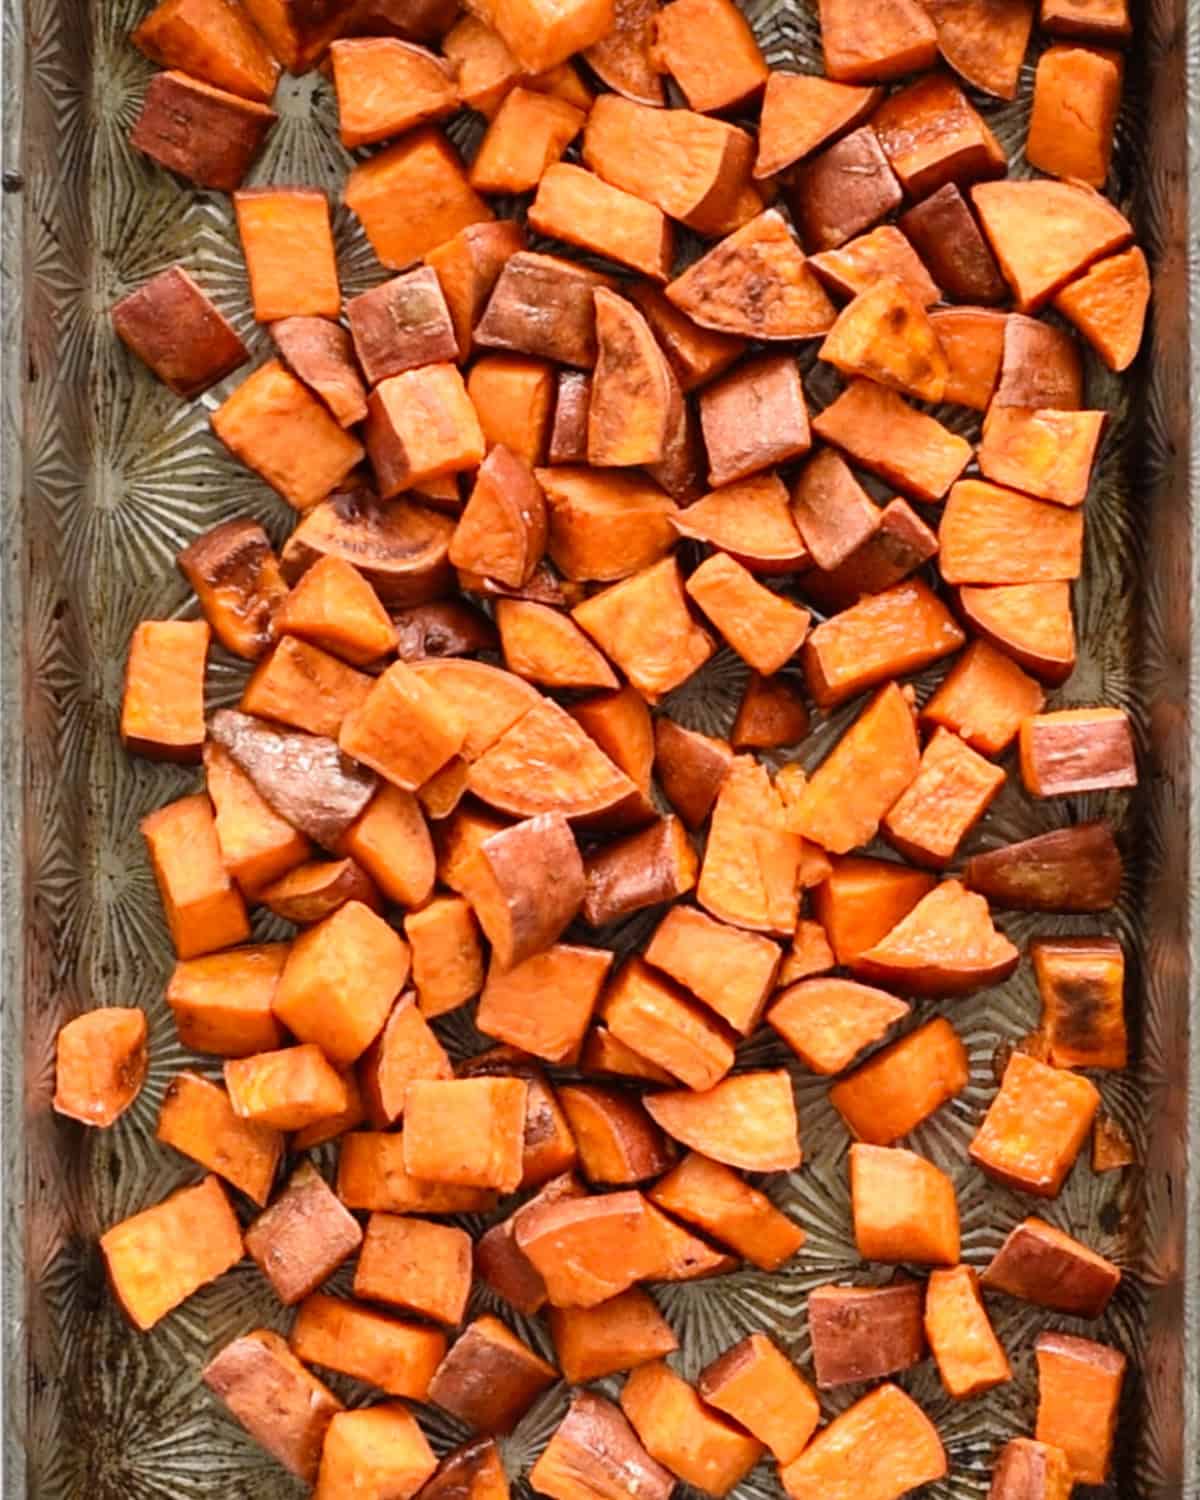 final cinnamon sweet potatoes on a baking sheet after roasting